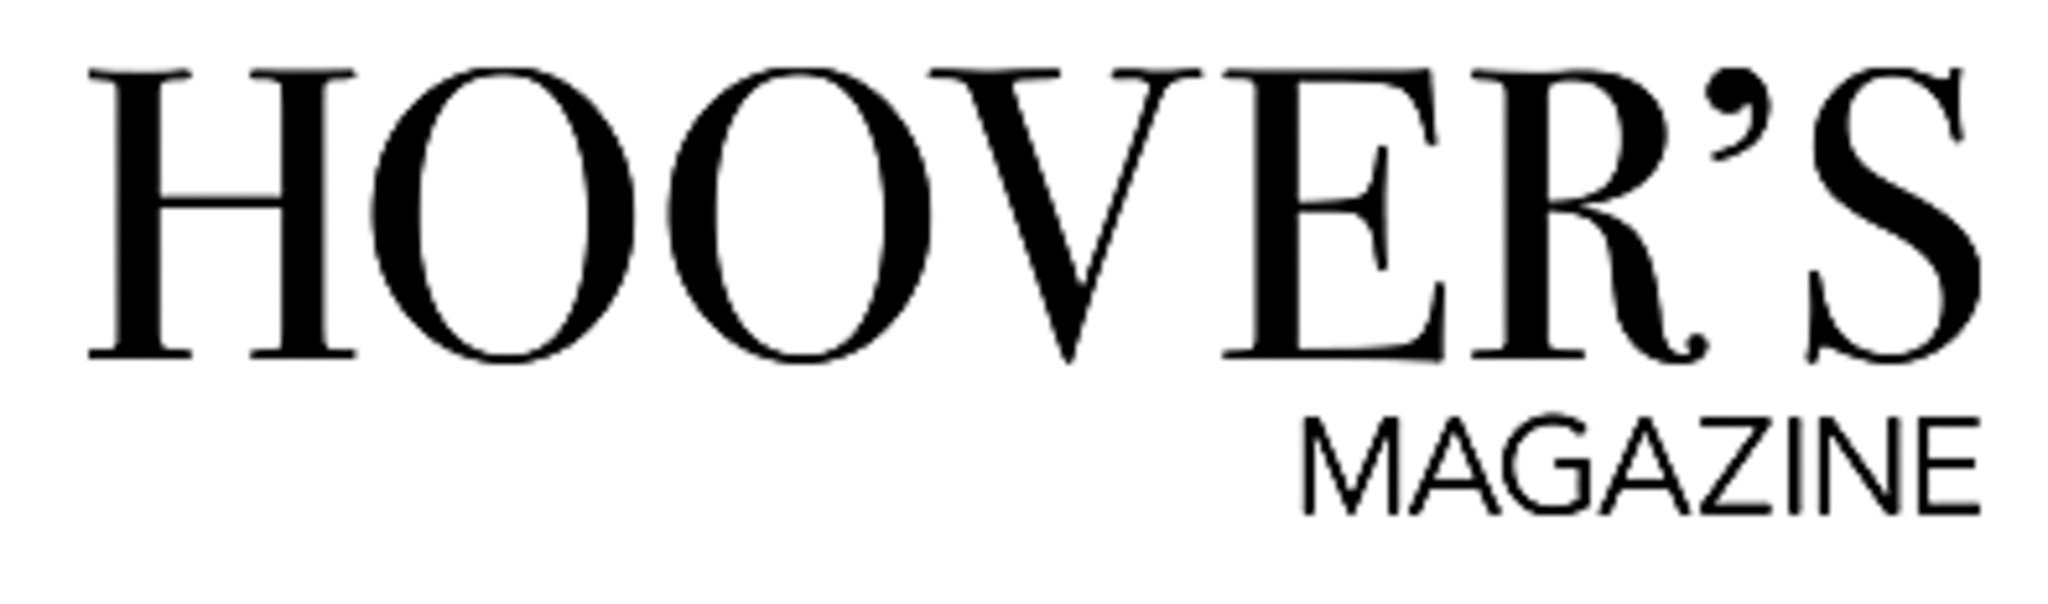 Logo_HooversMagazine.jpg